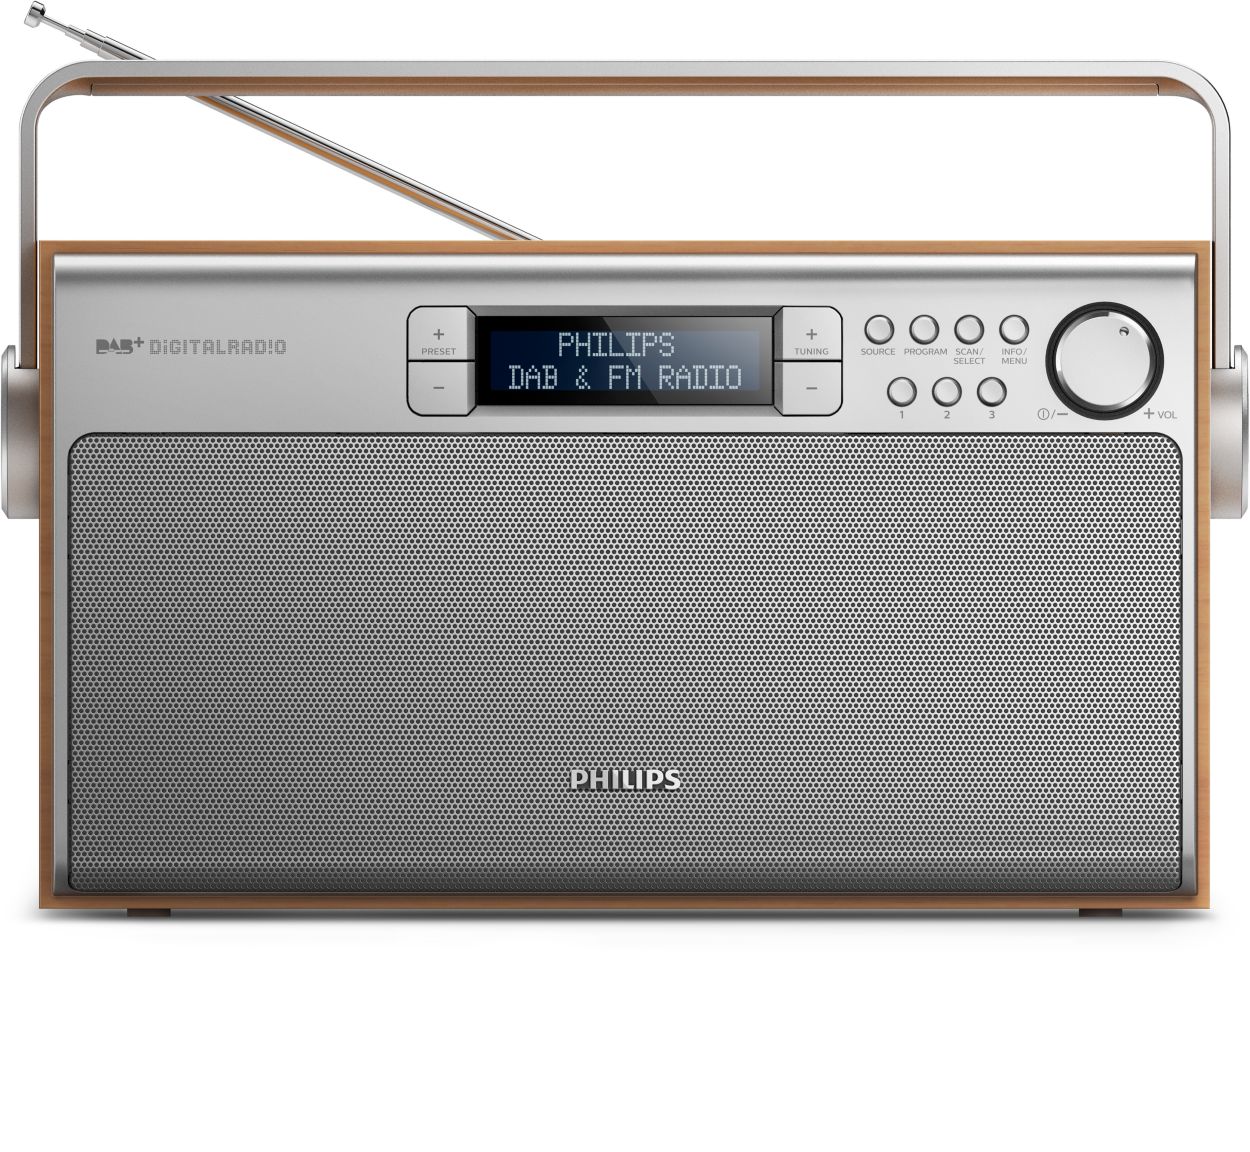 Scheiding vlotter elleboog Draagbare radio AE5220/12 | Philips